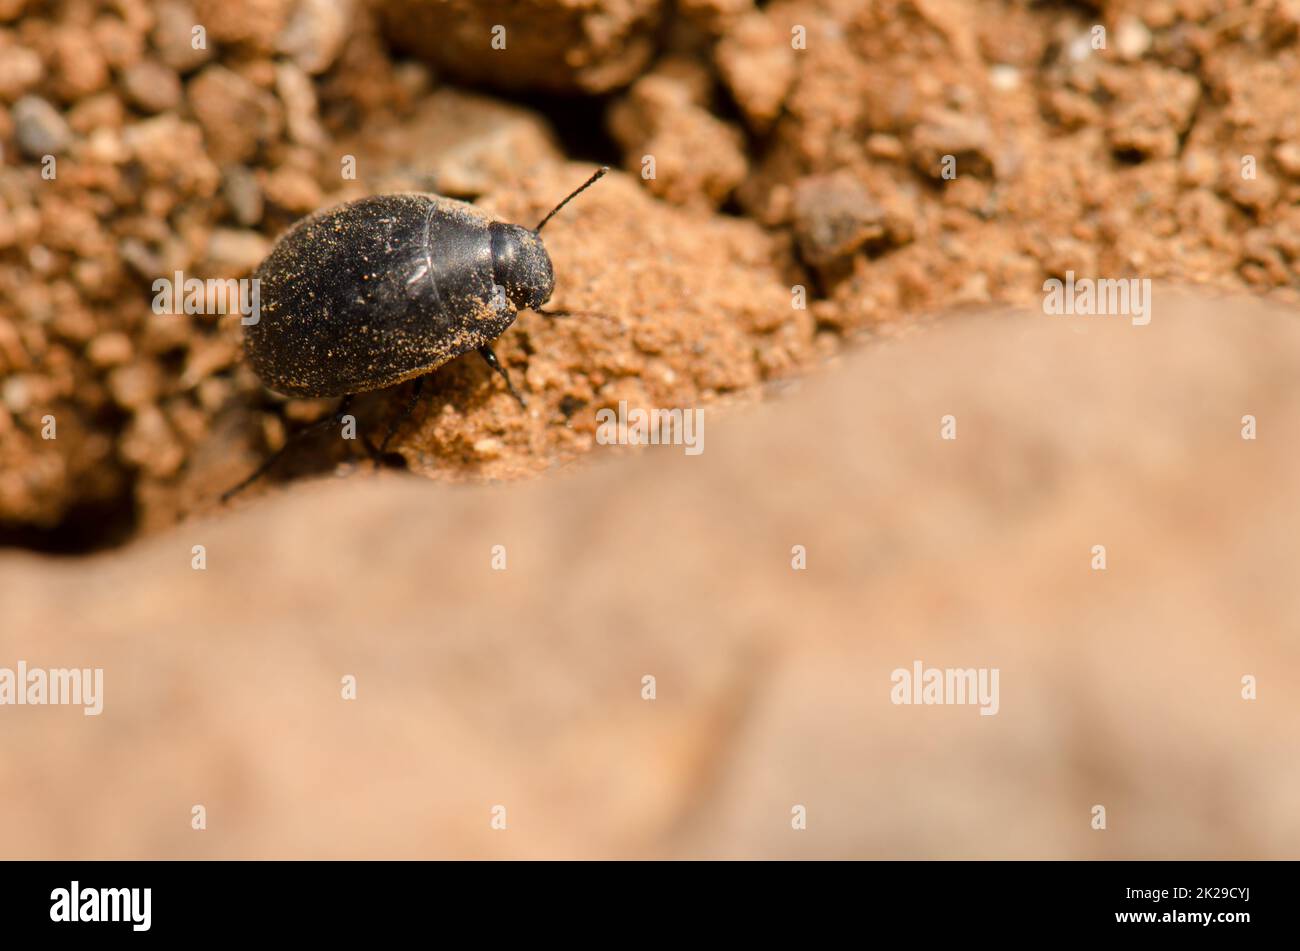 Beetle Zophosis bicarinata bicarinata on the ground. Stock Photo